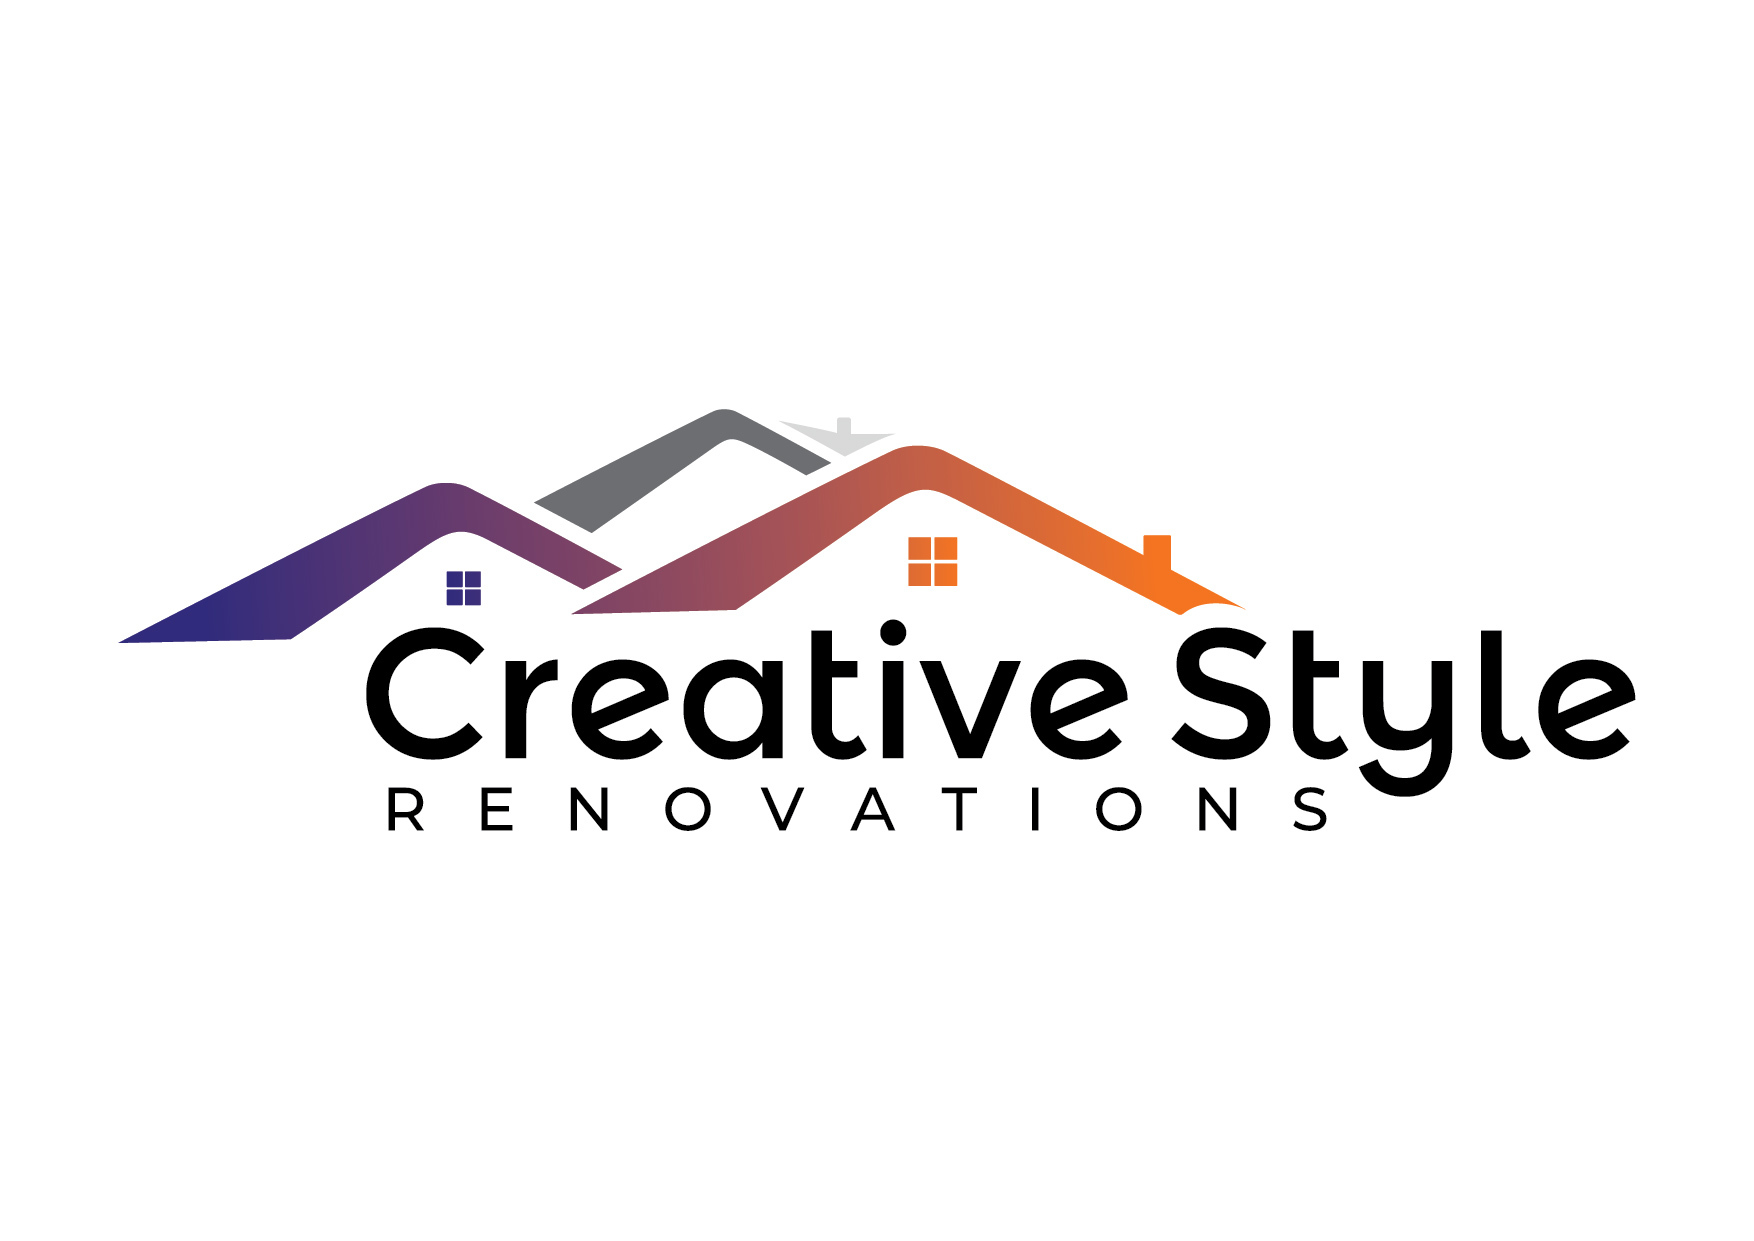 Creative Style Renovations's logo